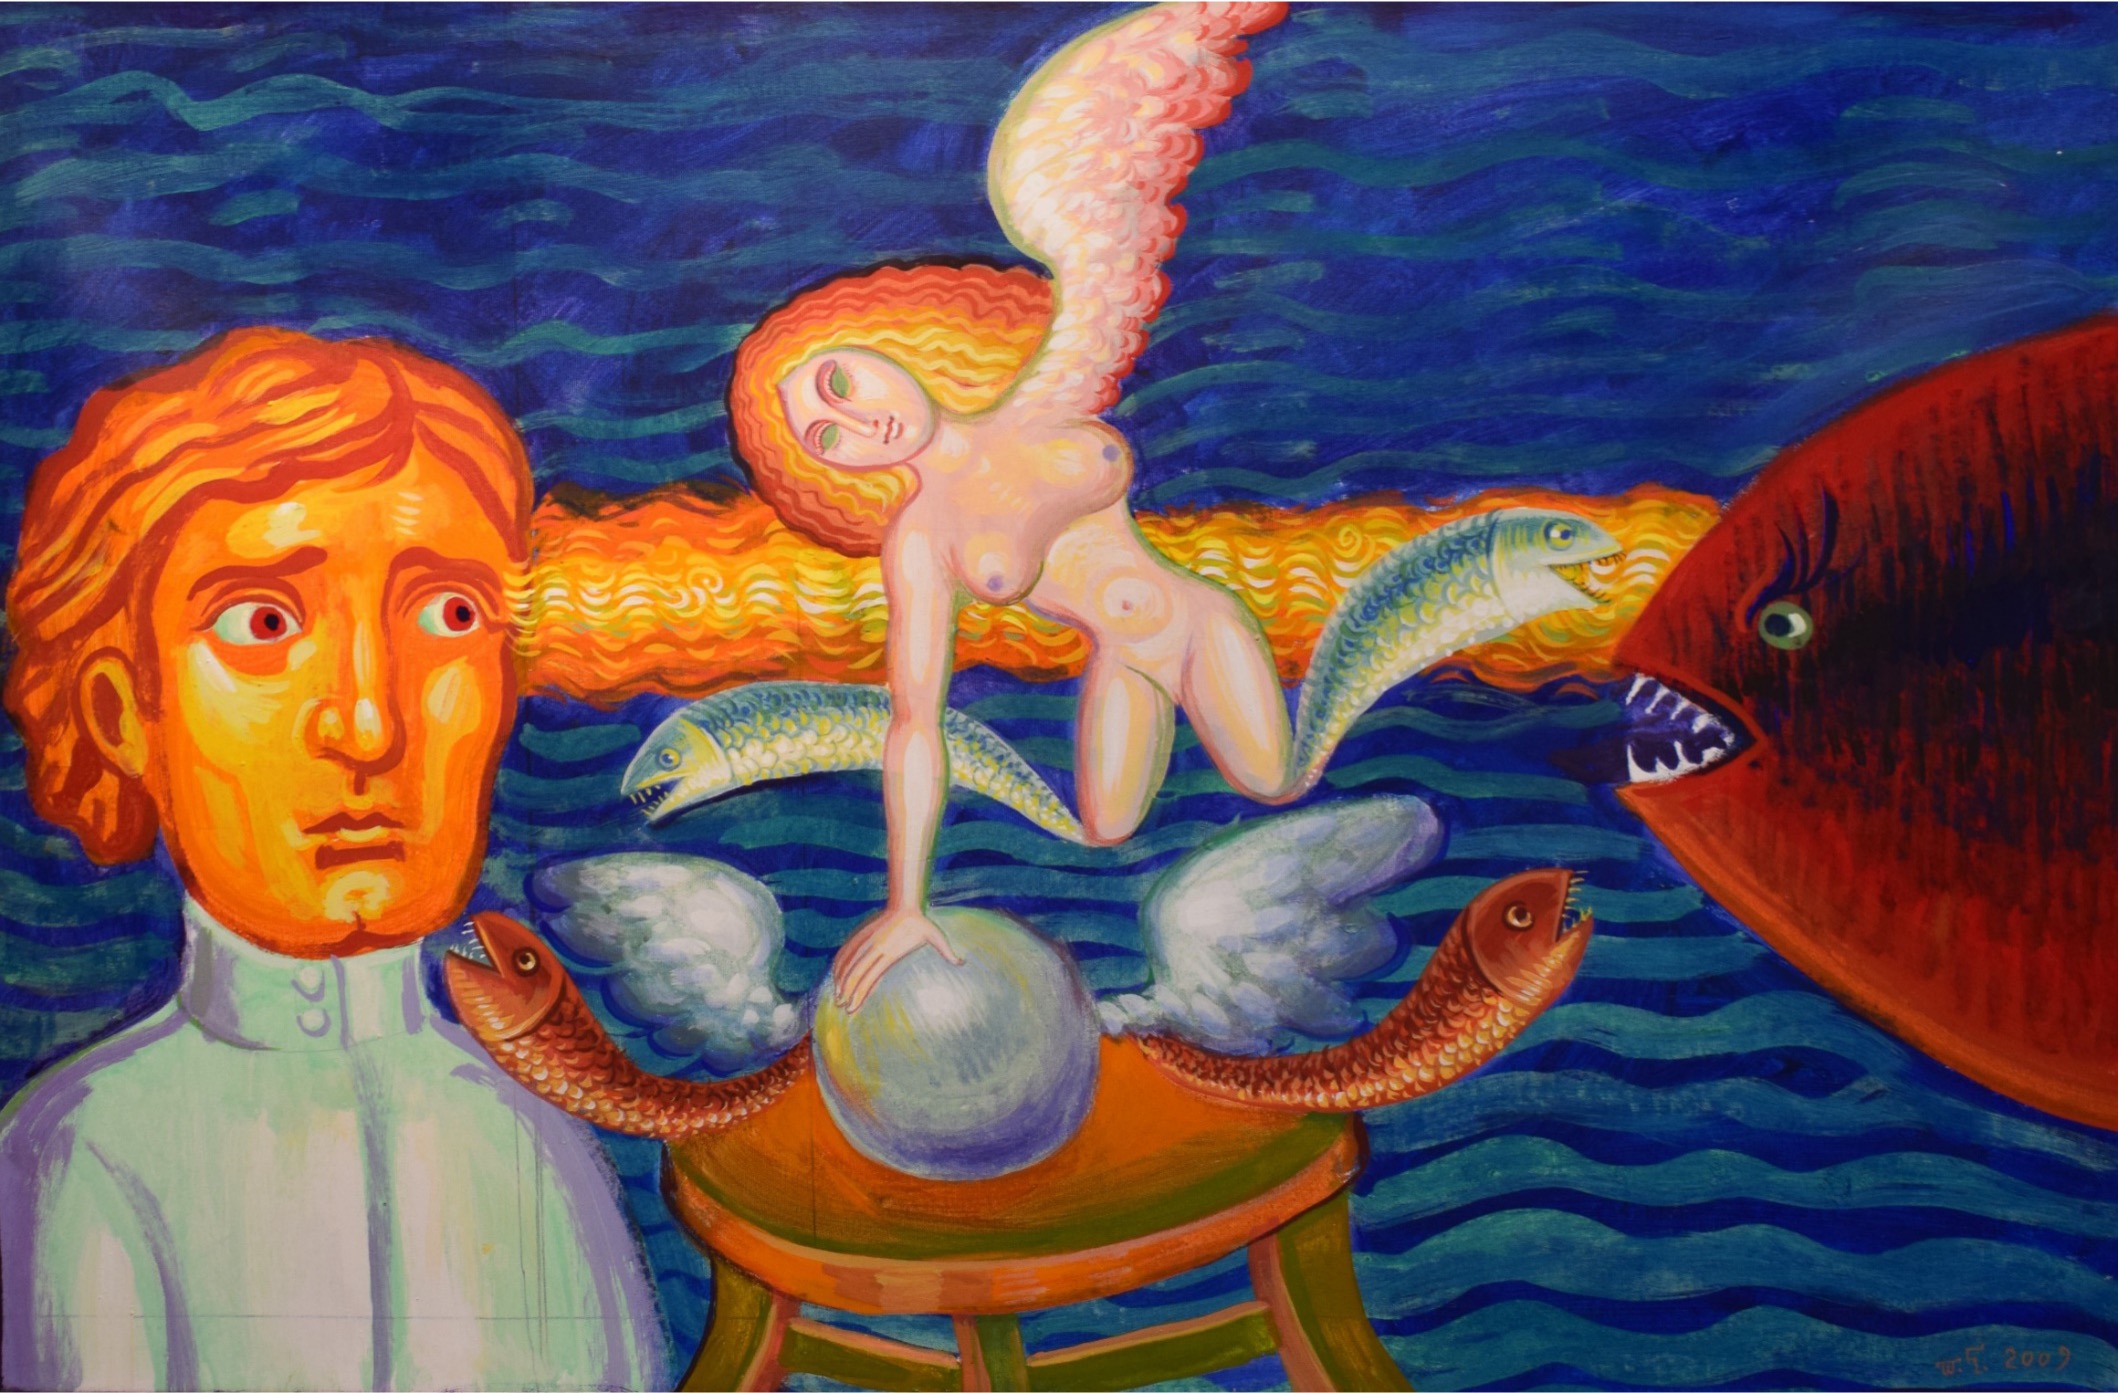 “Psychotherapist and Psychotherapeuted”, acrylic on canvas, 2009, 75x60 Π120 - Ψυχοθεραπευτής και Ψυχοθεραπευόμενος, 2009, ακρυλικό σε μουσαμά, 75*60